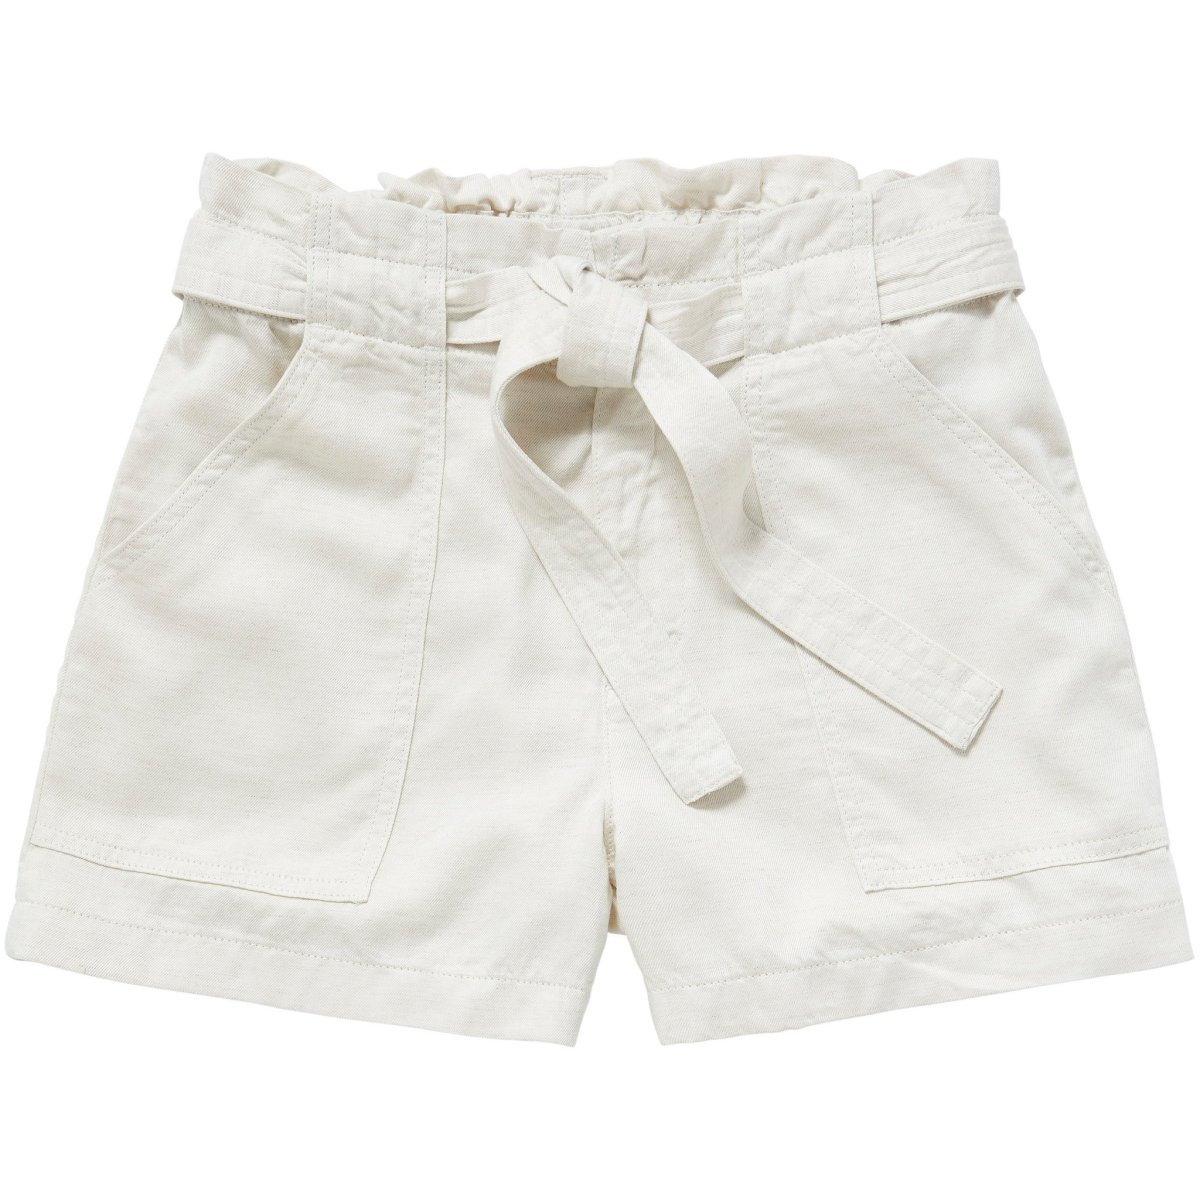 leah-shorts-16981.jpeg